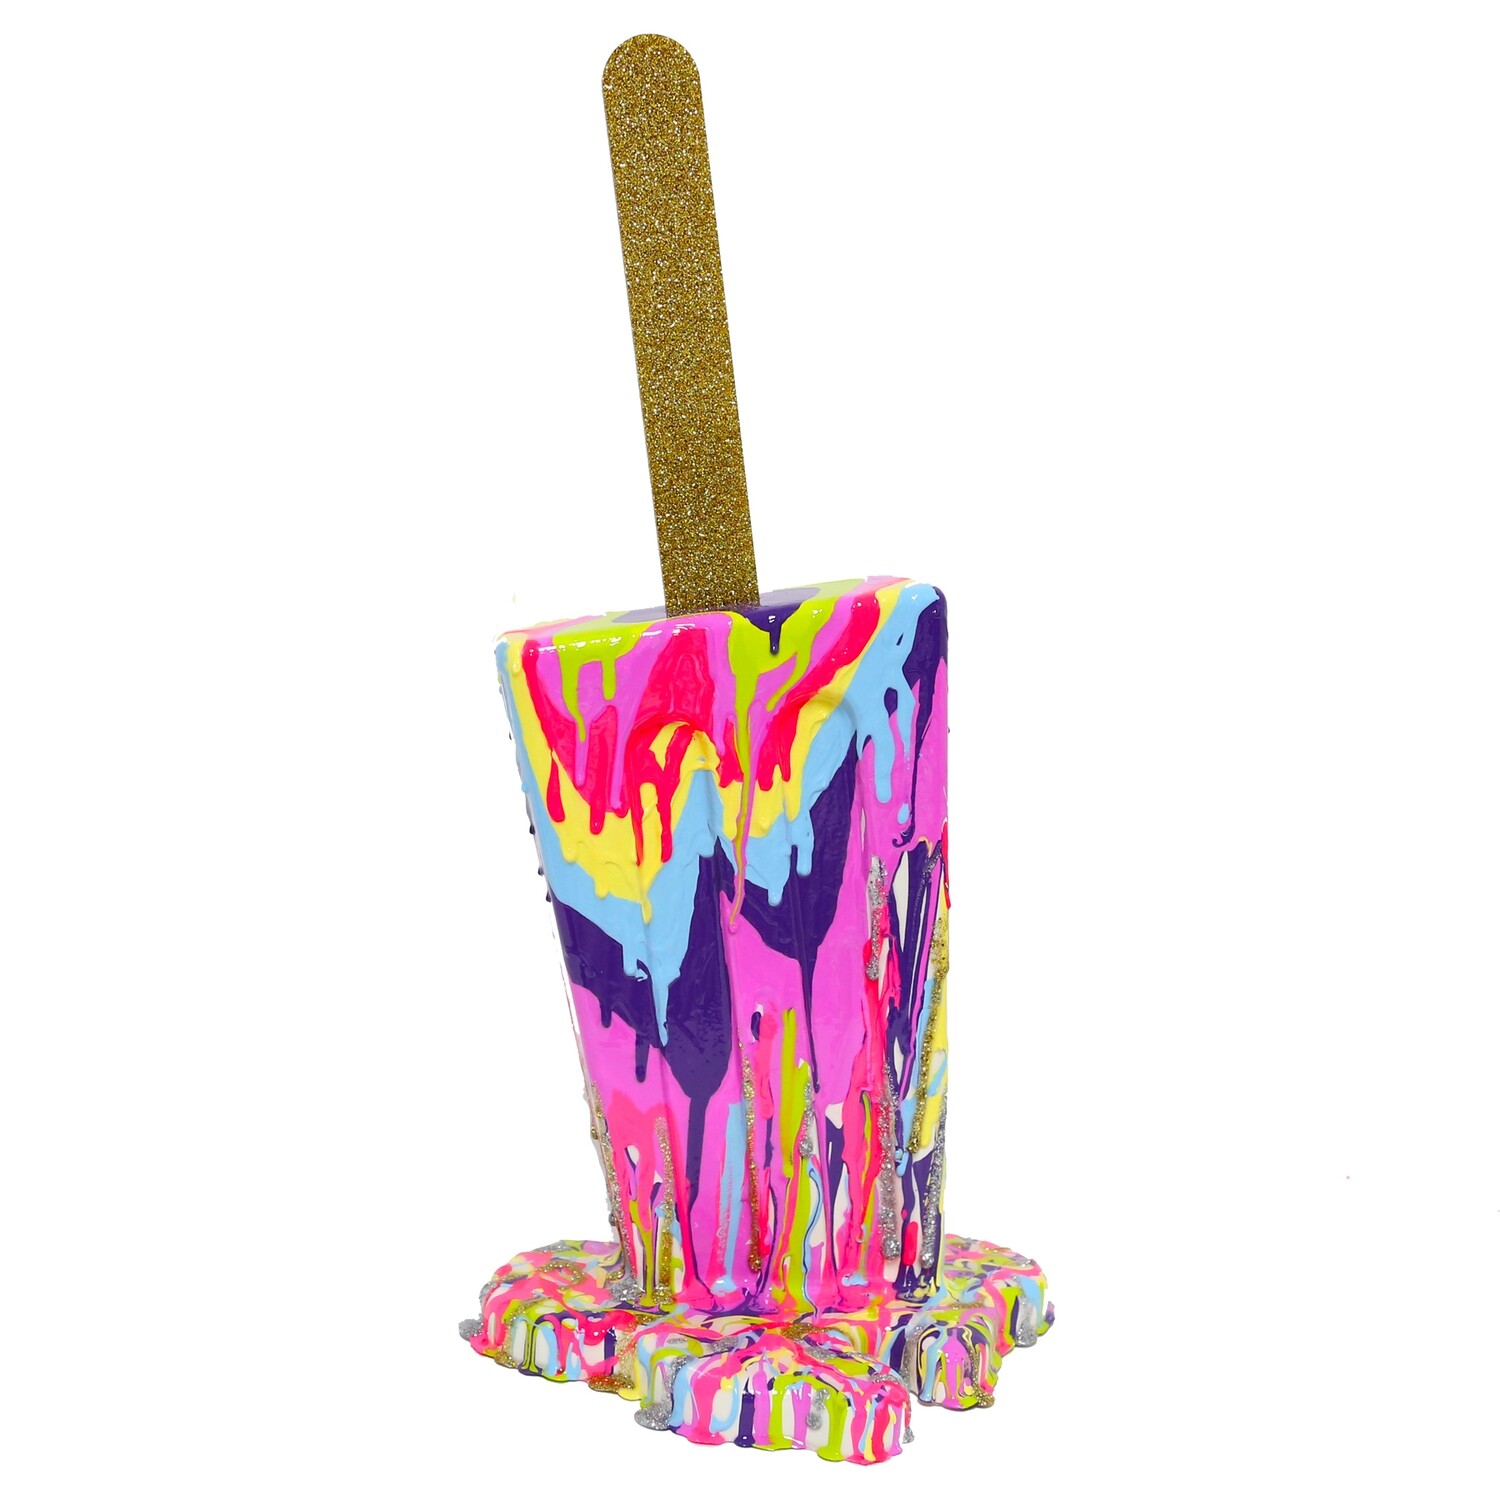 Melting Popsicle Art - Your True Colors